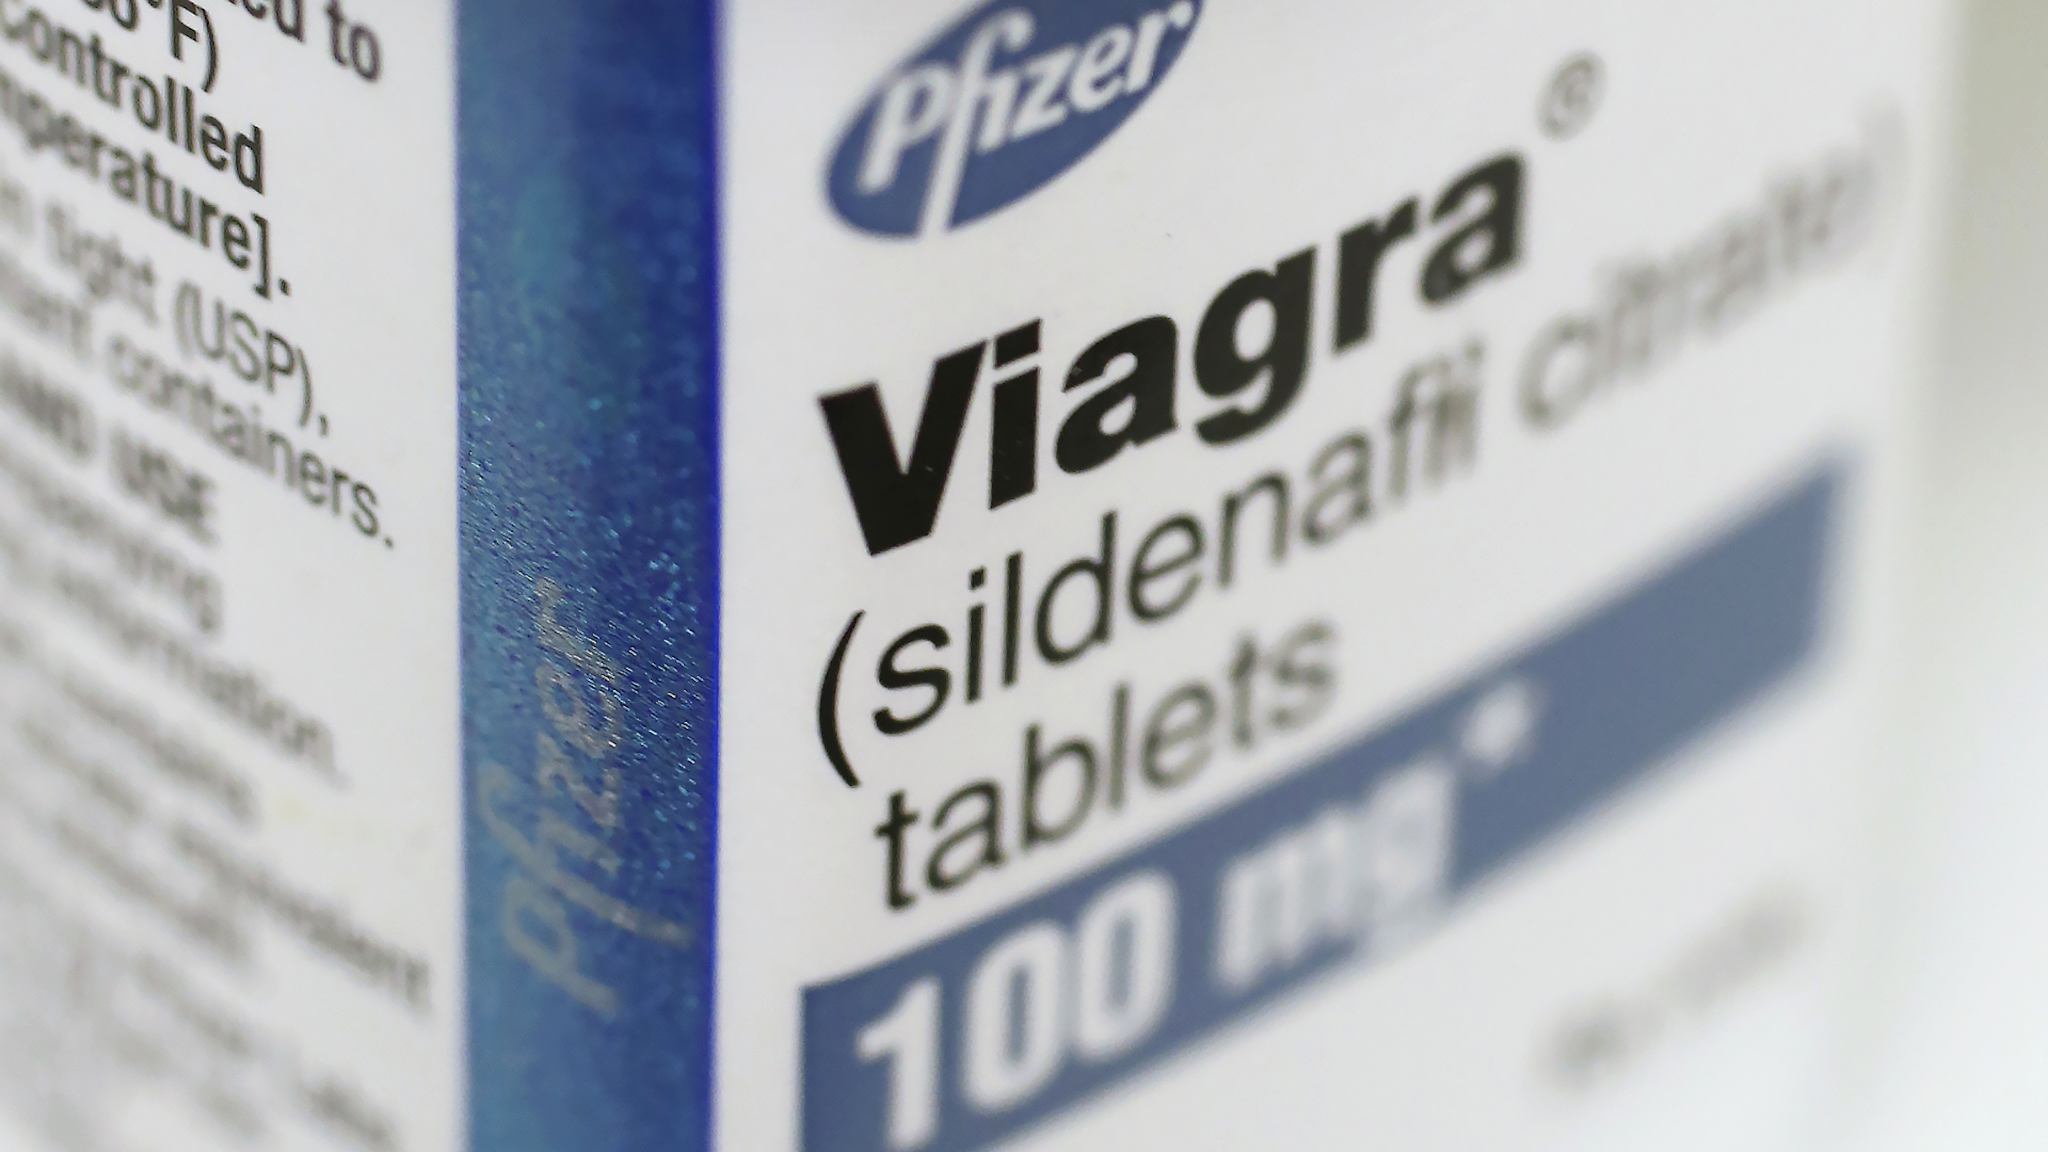 Pfizer Inc.'s Viagra medication sits on a pharmacy shelf in Provo, Utah, U.S., on Wednesday, Aug. 31, 2016.